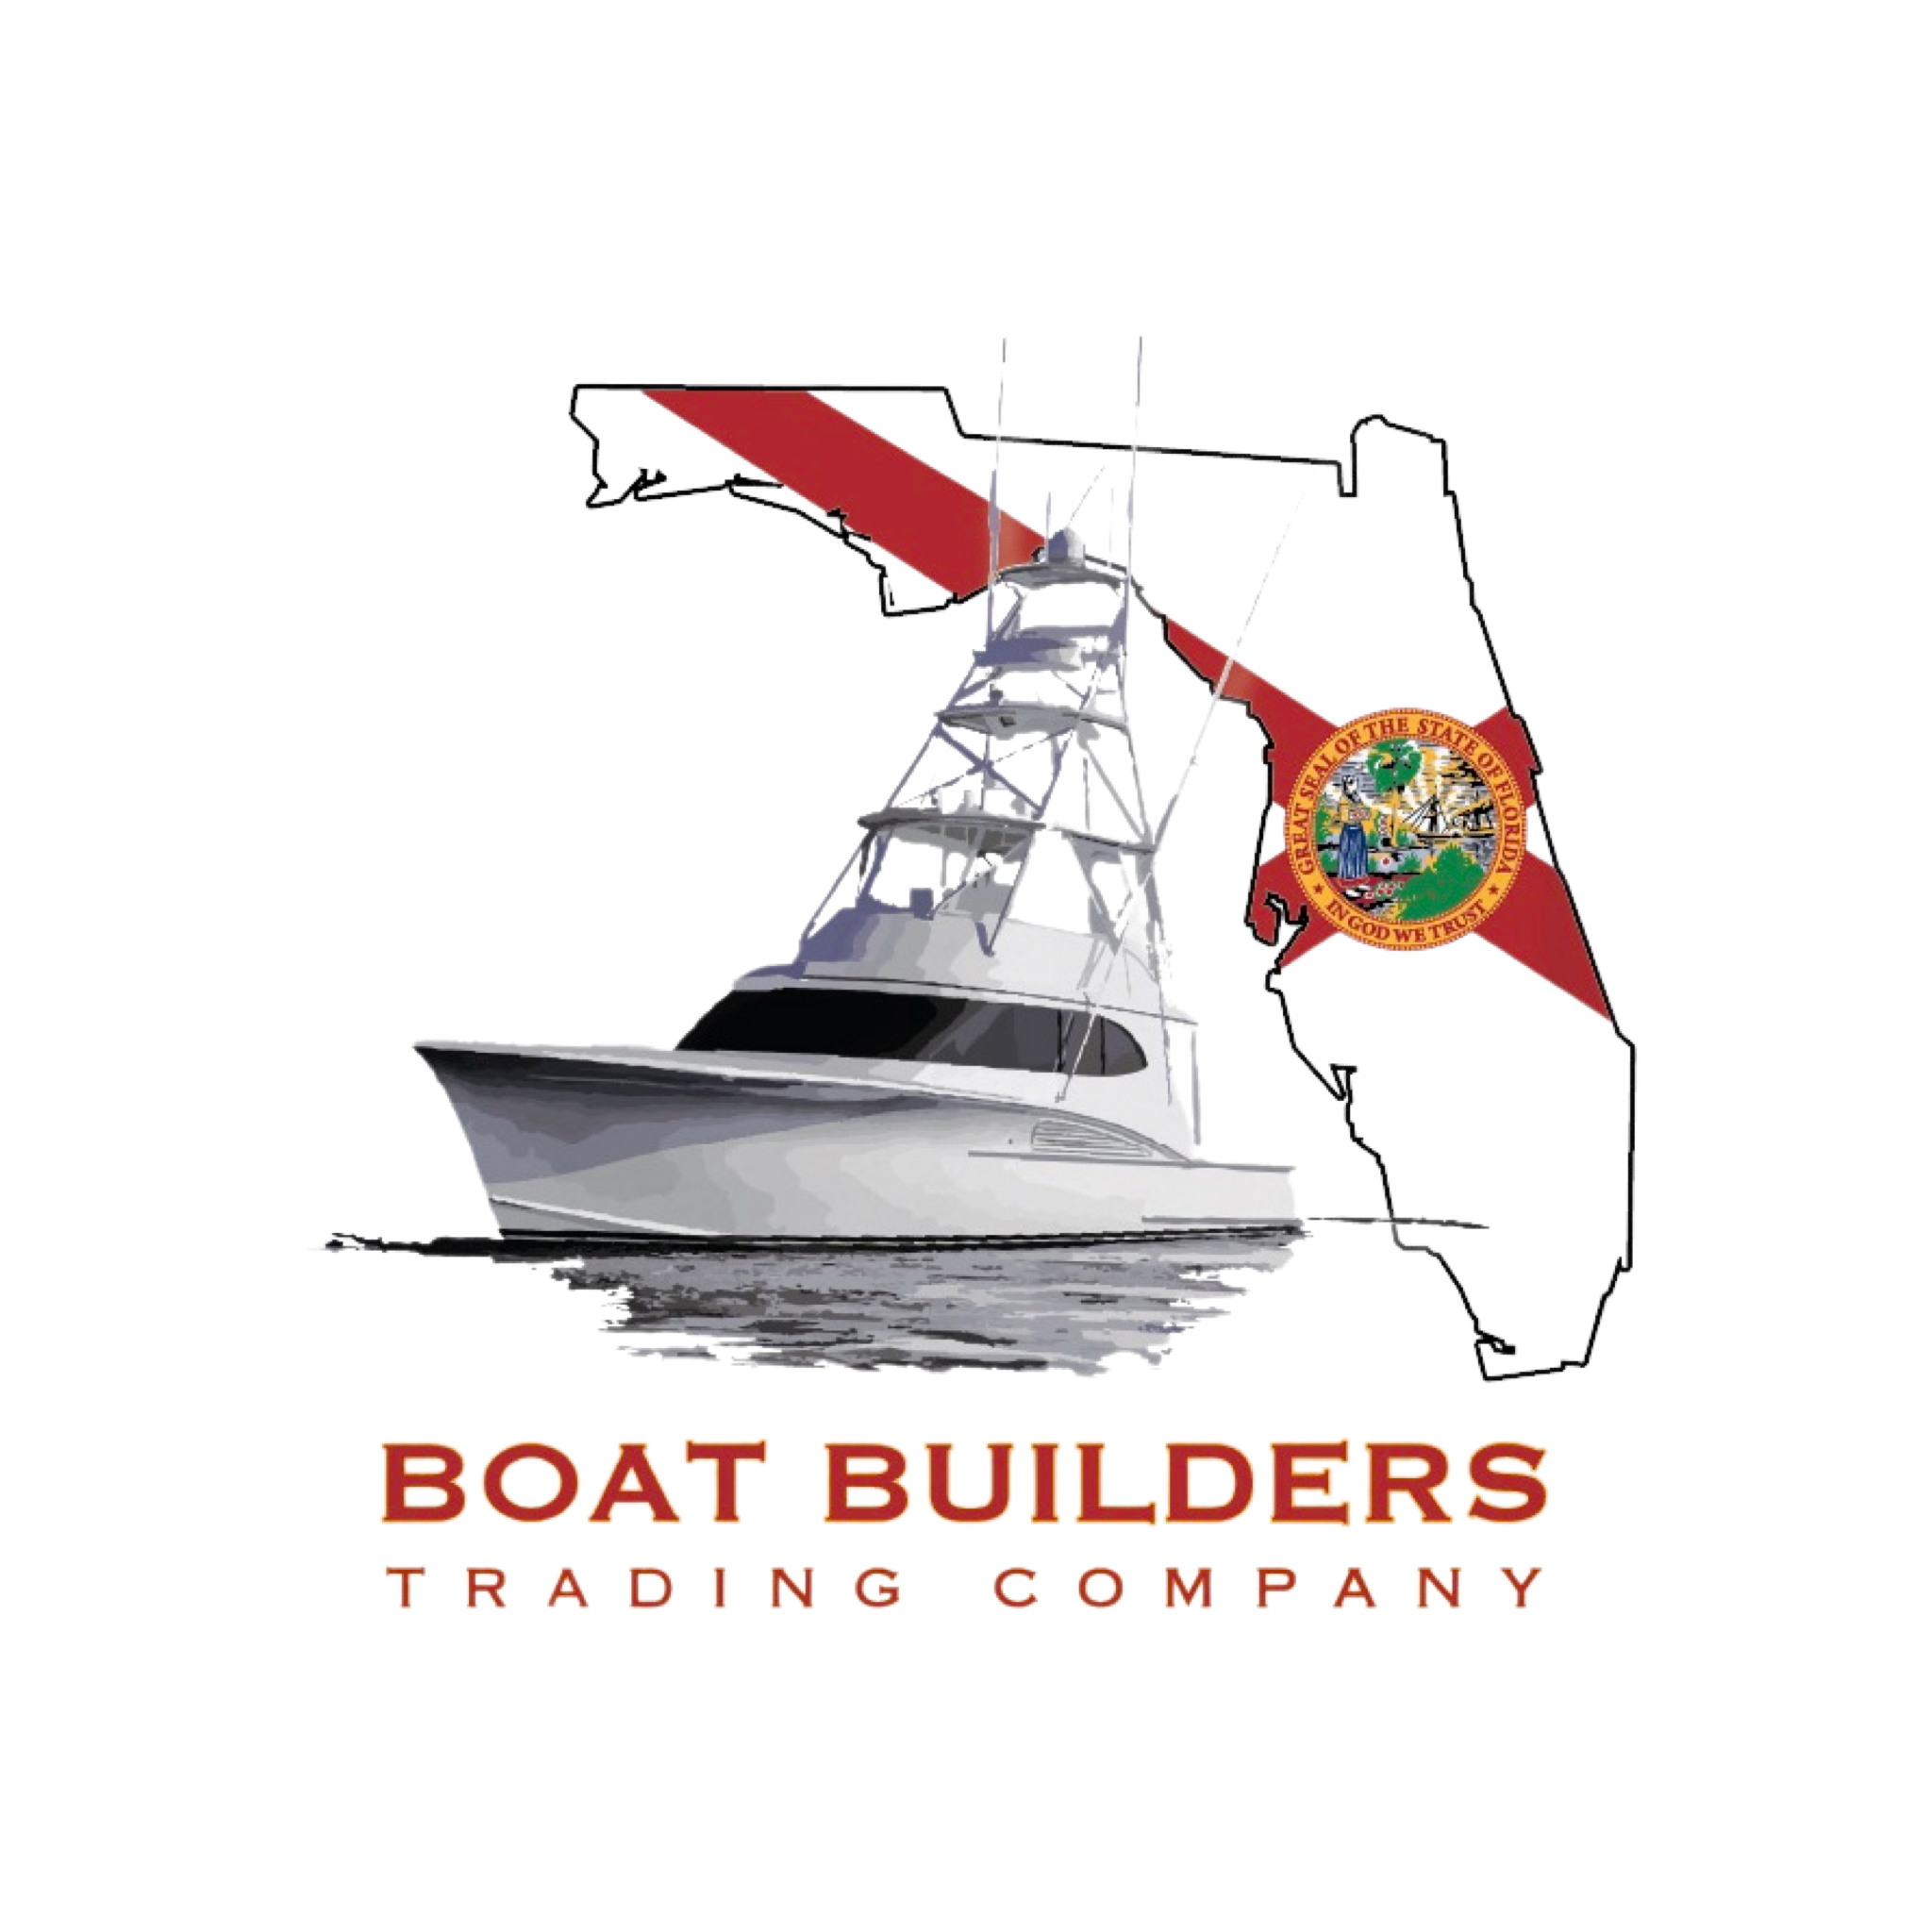 Boat Builders Trading Florida Flag 58' Sportfish - Long sleeve